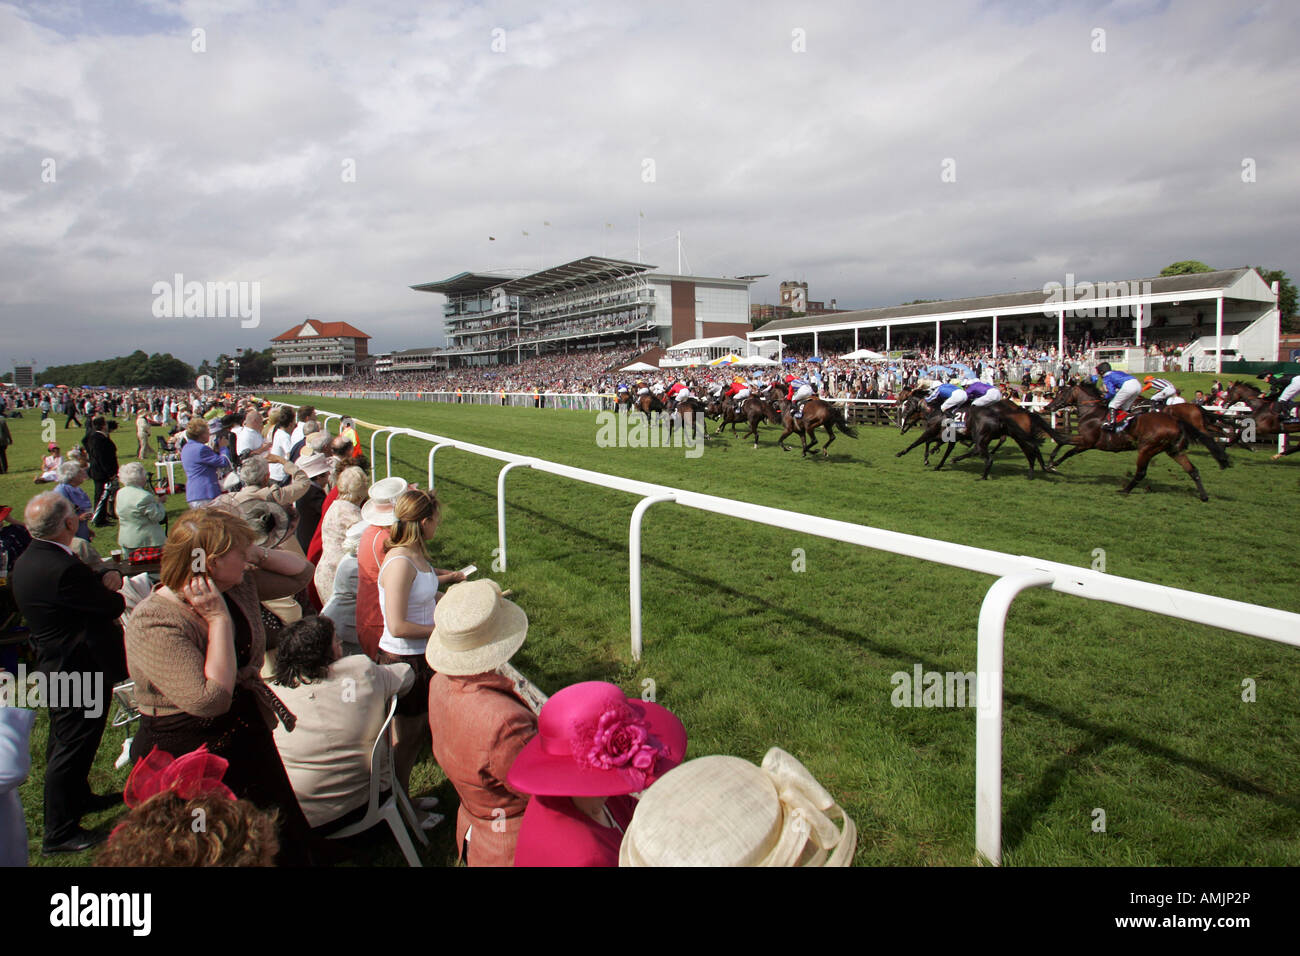 A horse race, Royal Ascot at York, Great Britain Stock Photo